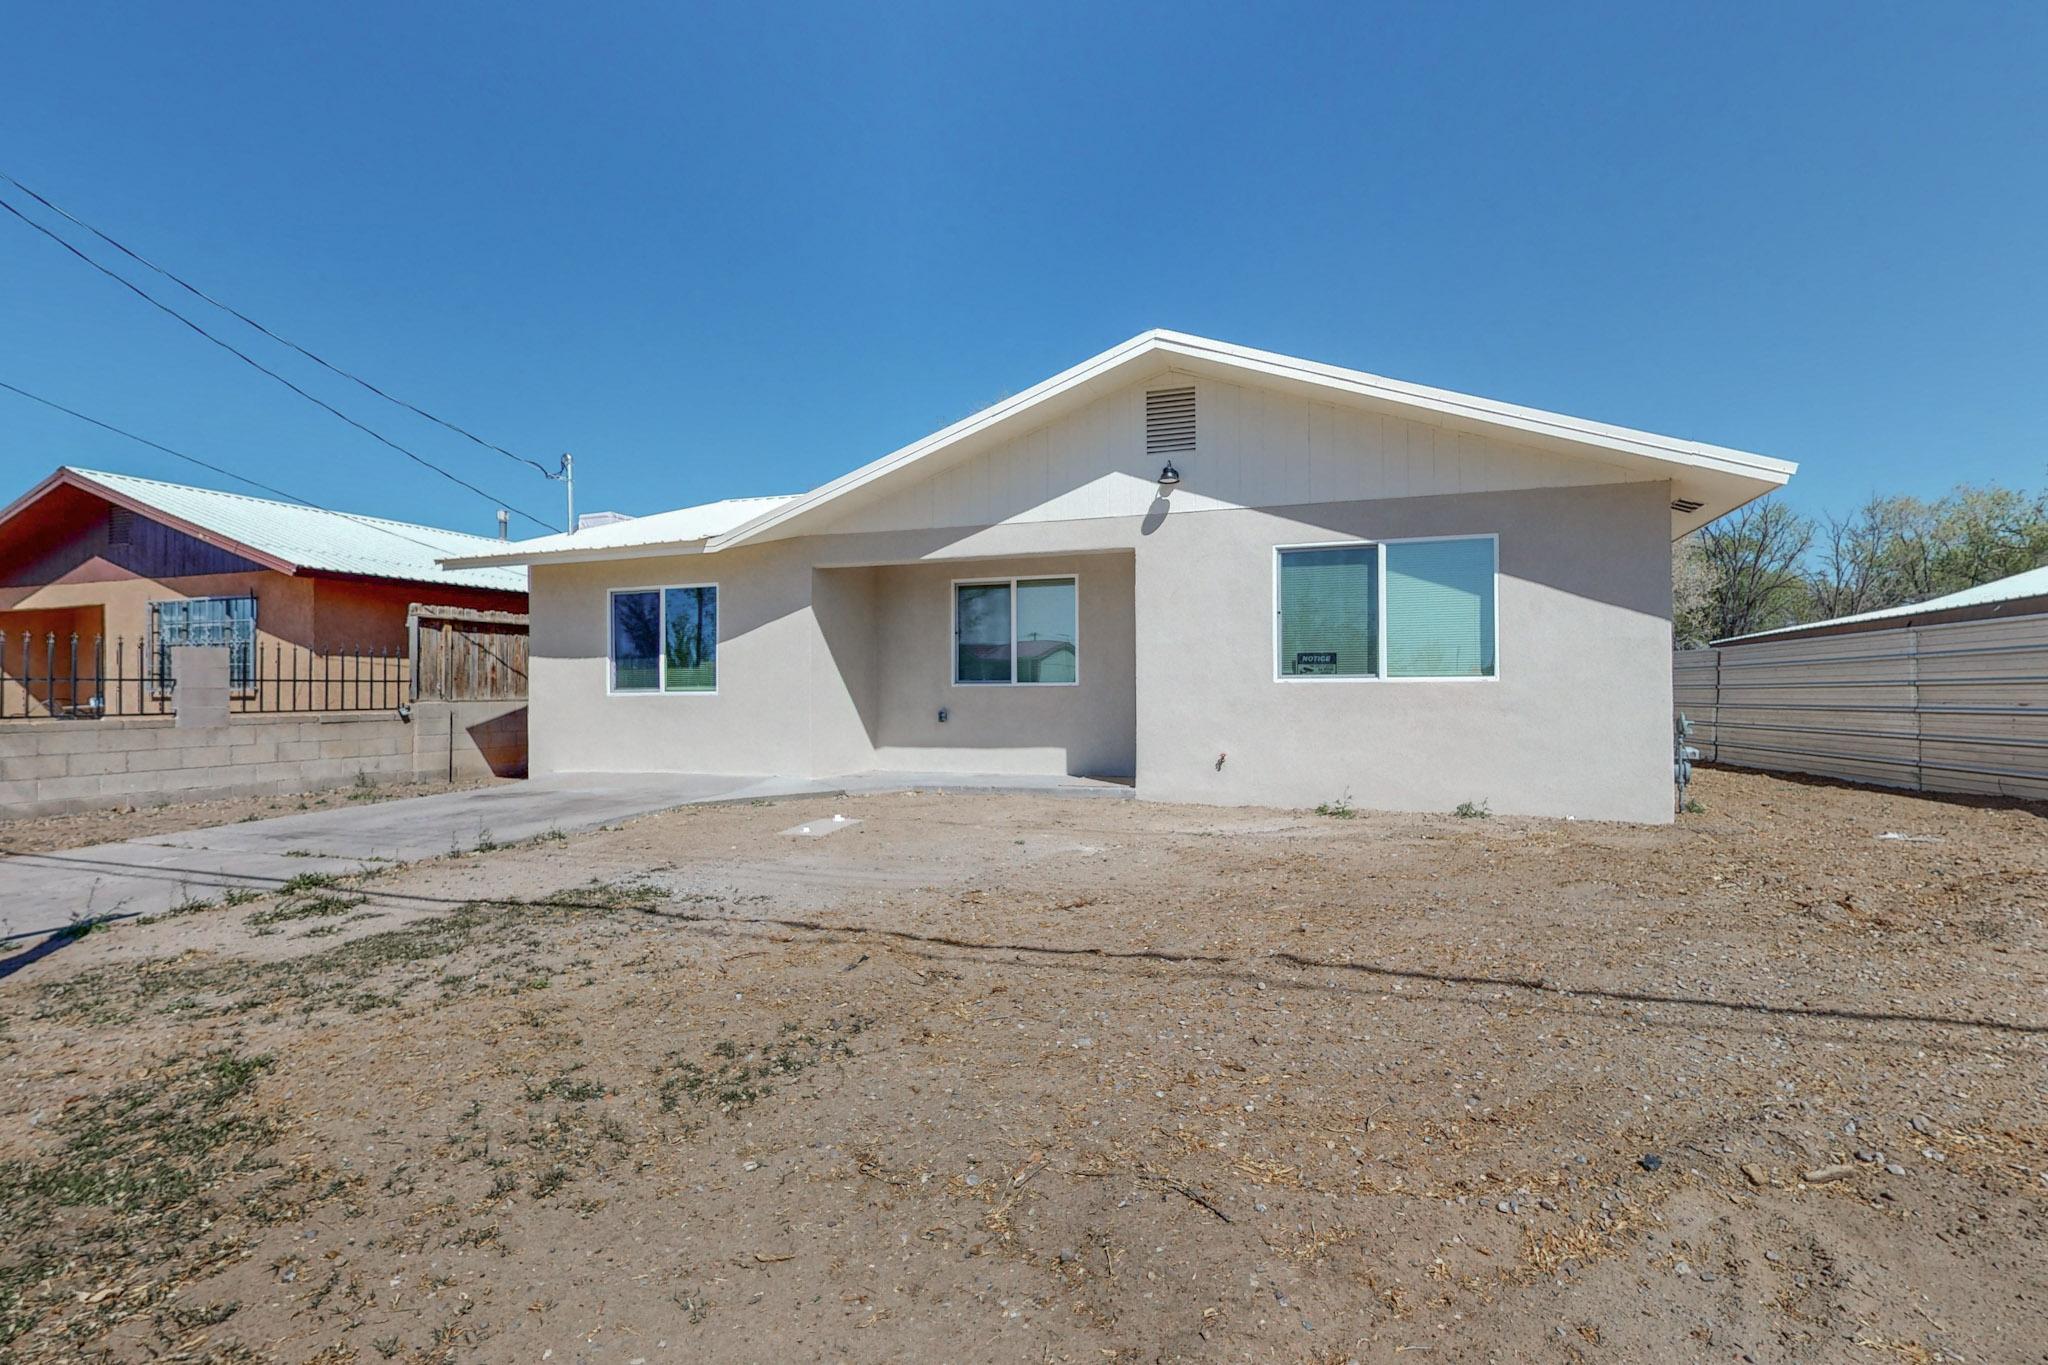 406 S Third Street, Belen, New Mexico 87002, 3 Bedrooms Bedrooms, ,2 BathroomsBathrooms,Residential,For Sale,406 S Third Street,1060341